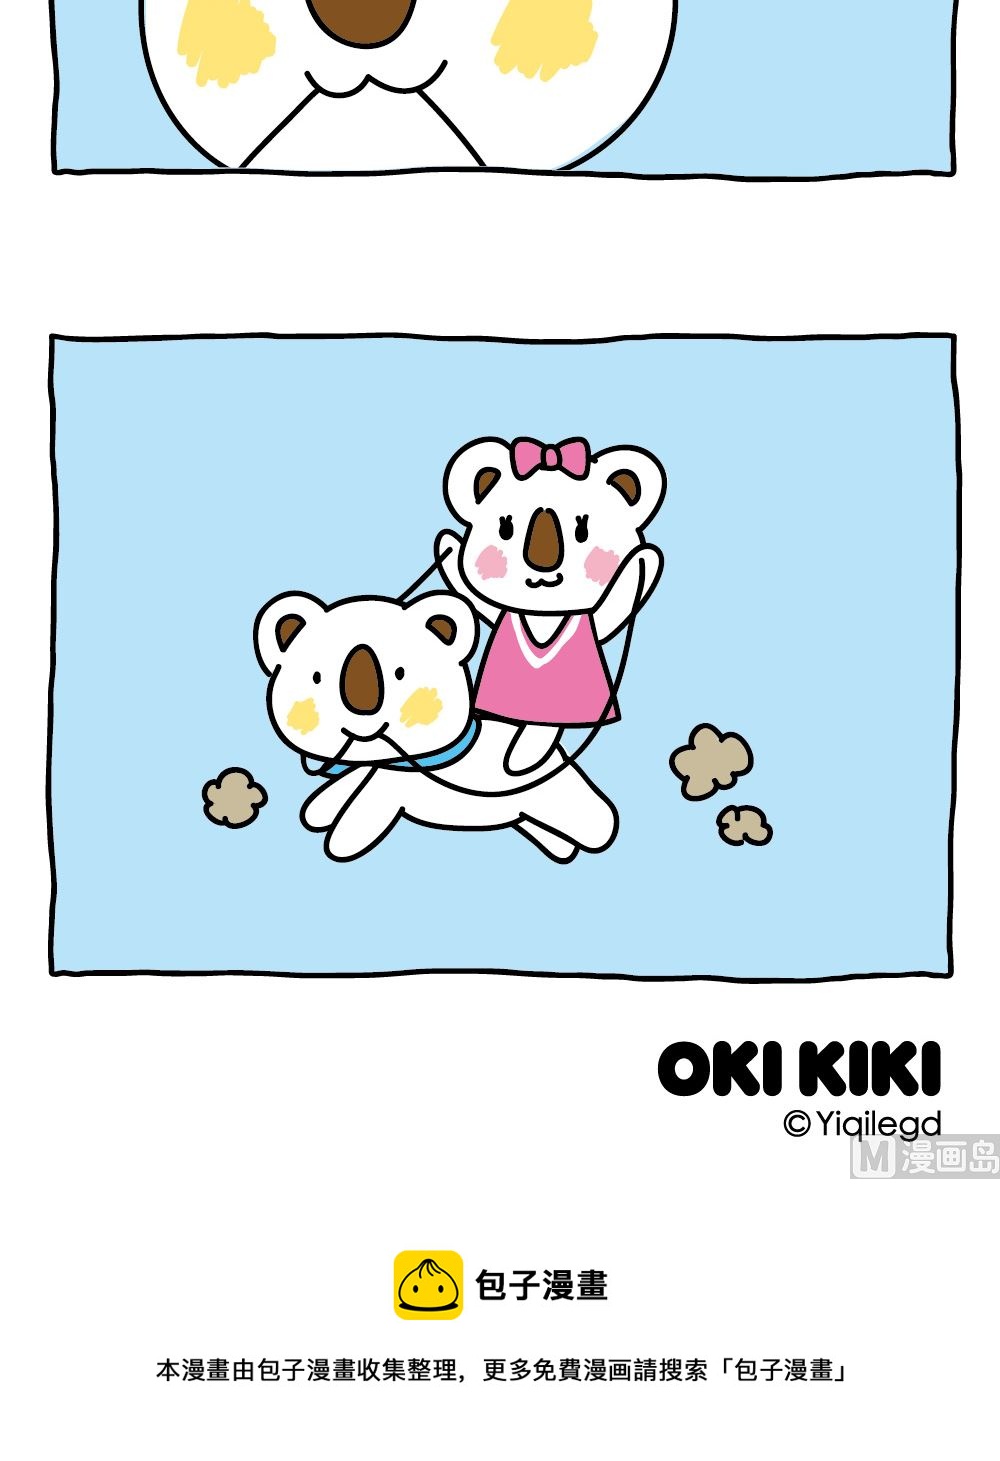 OK Moment - OK Moment-約女神運動 - 1